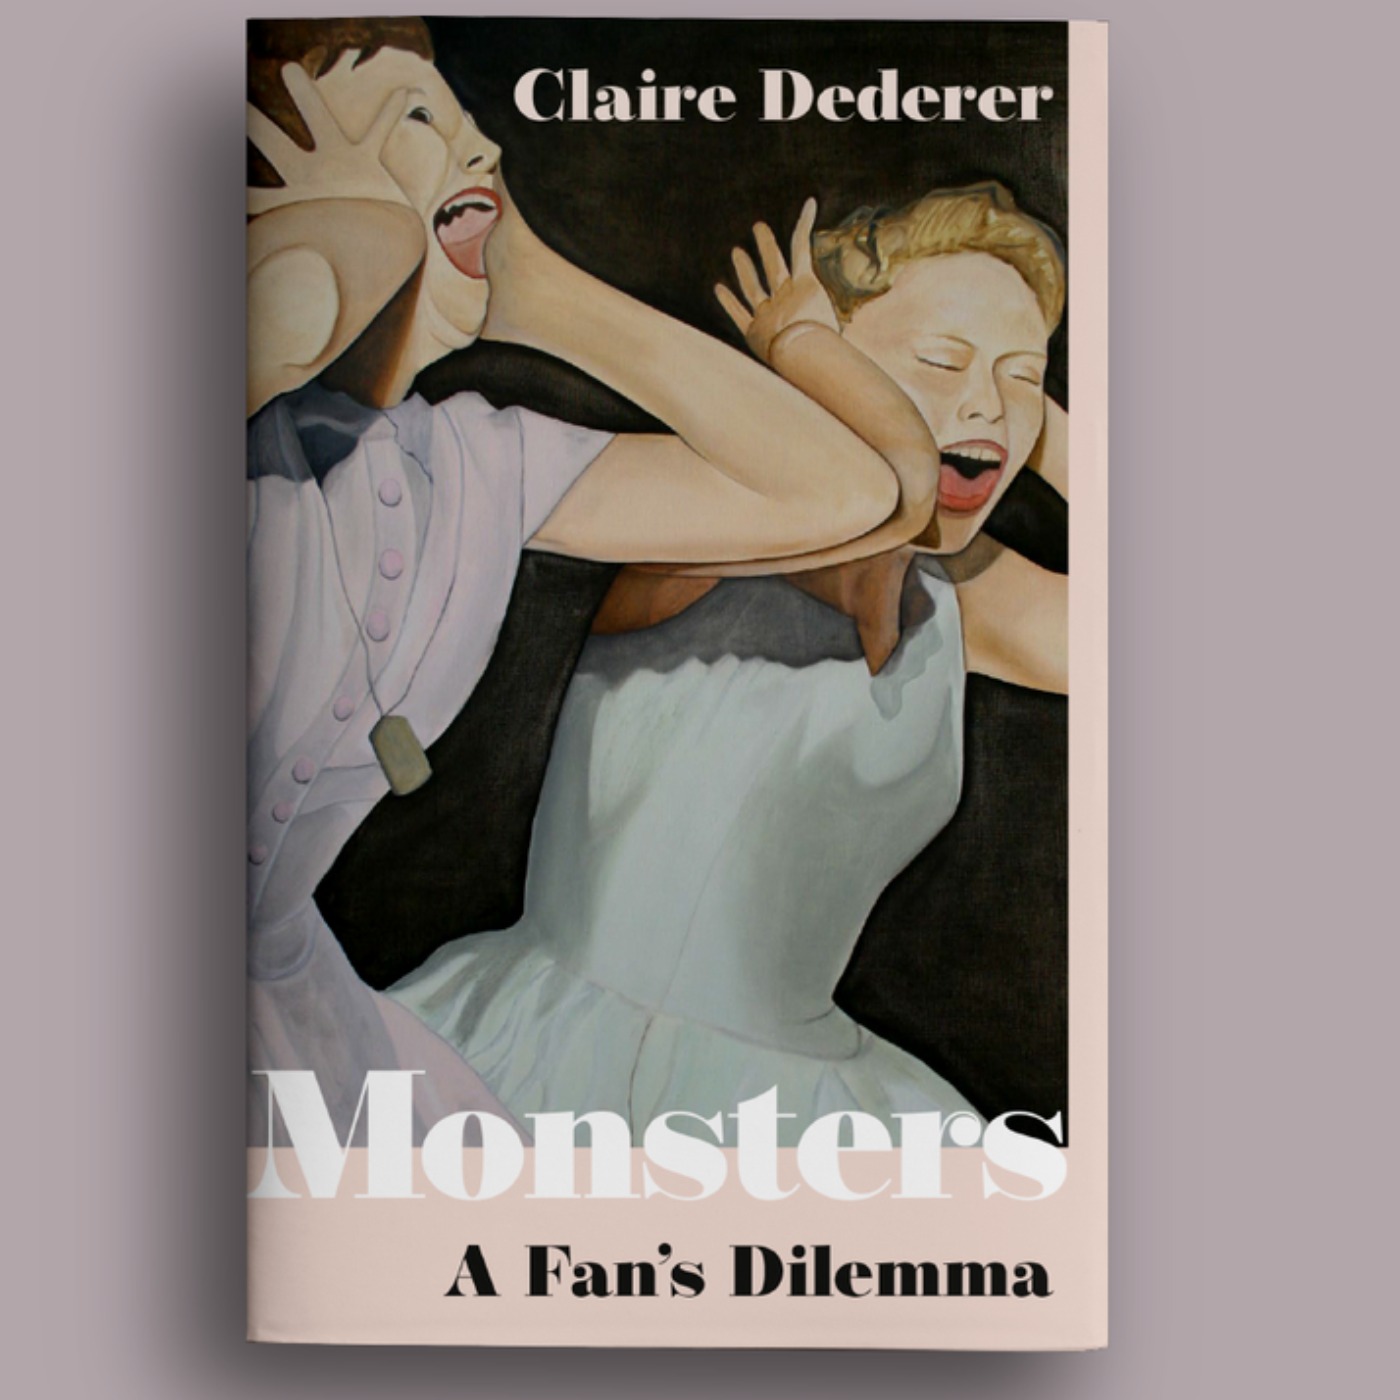 Little Atoms 829 - Claire Dederer’s Monsters